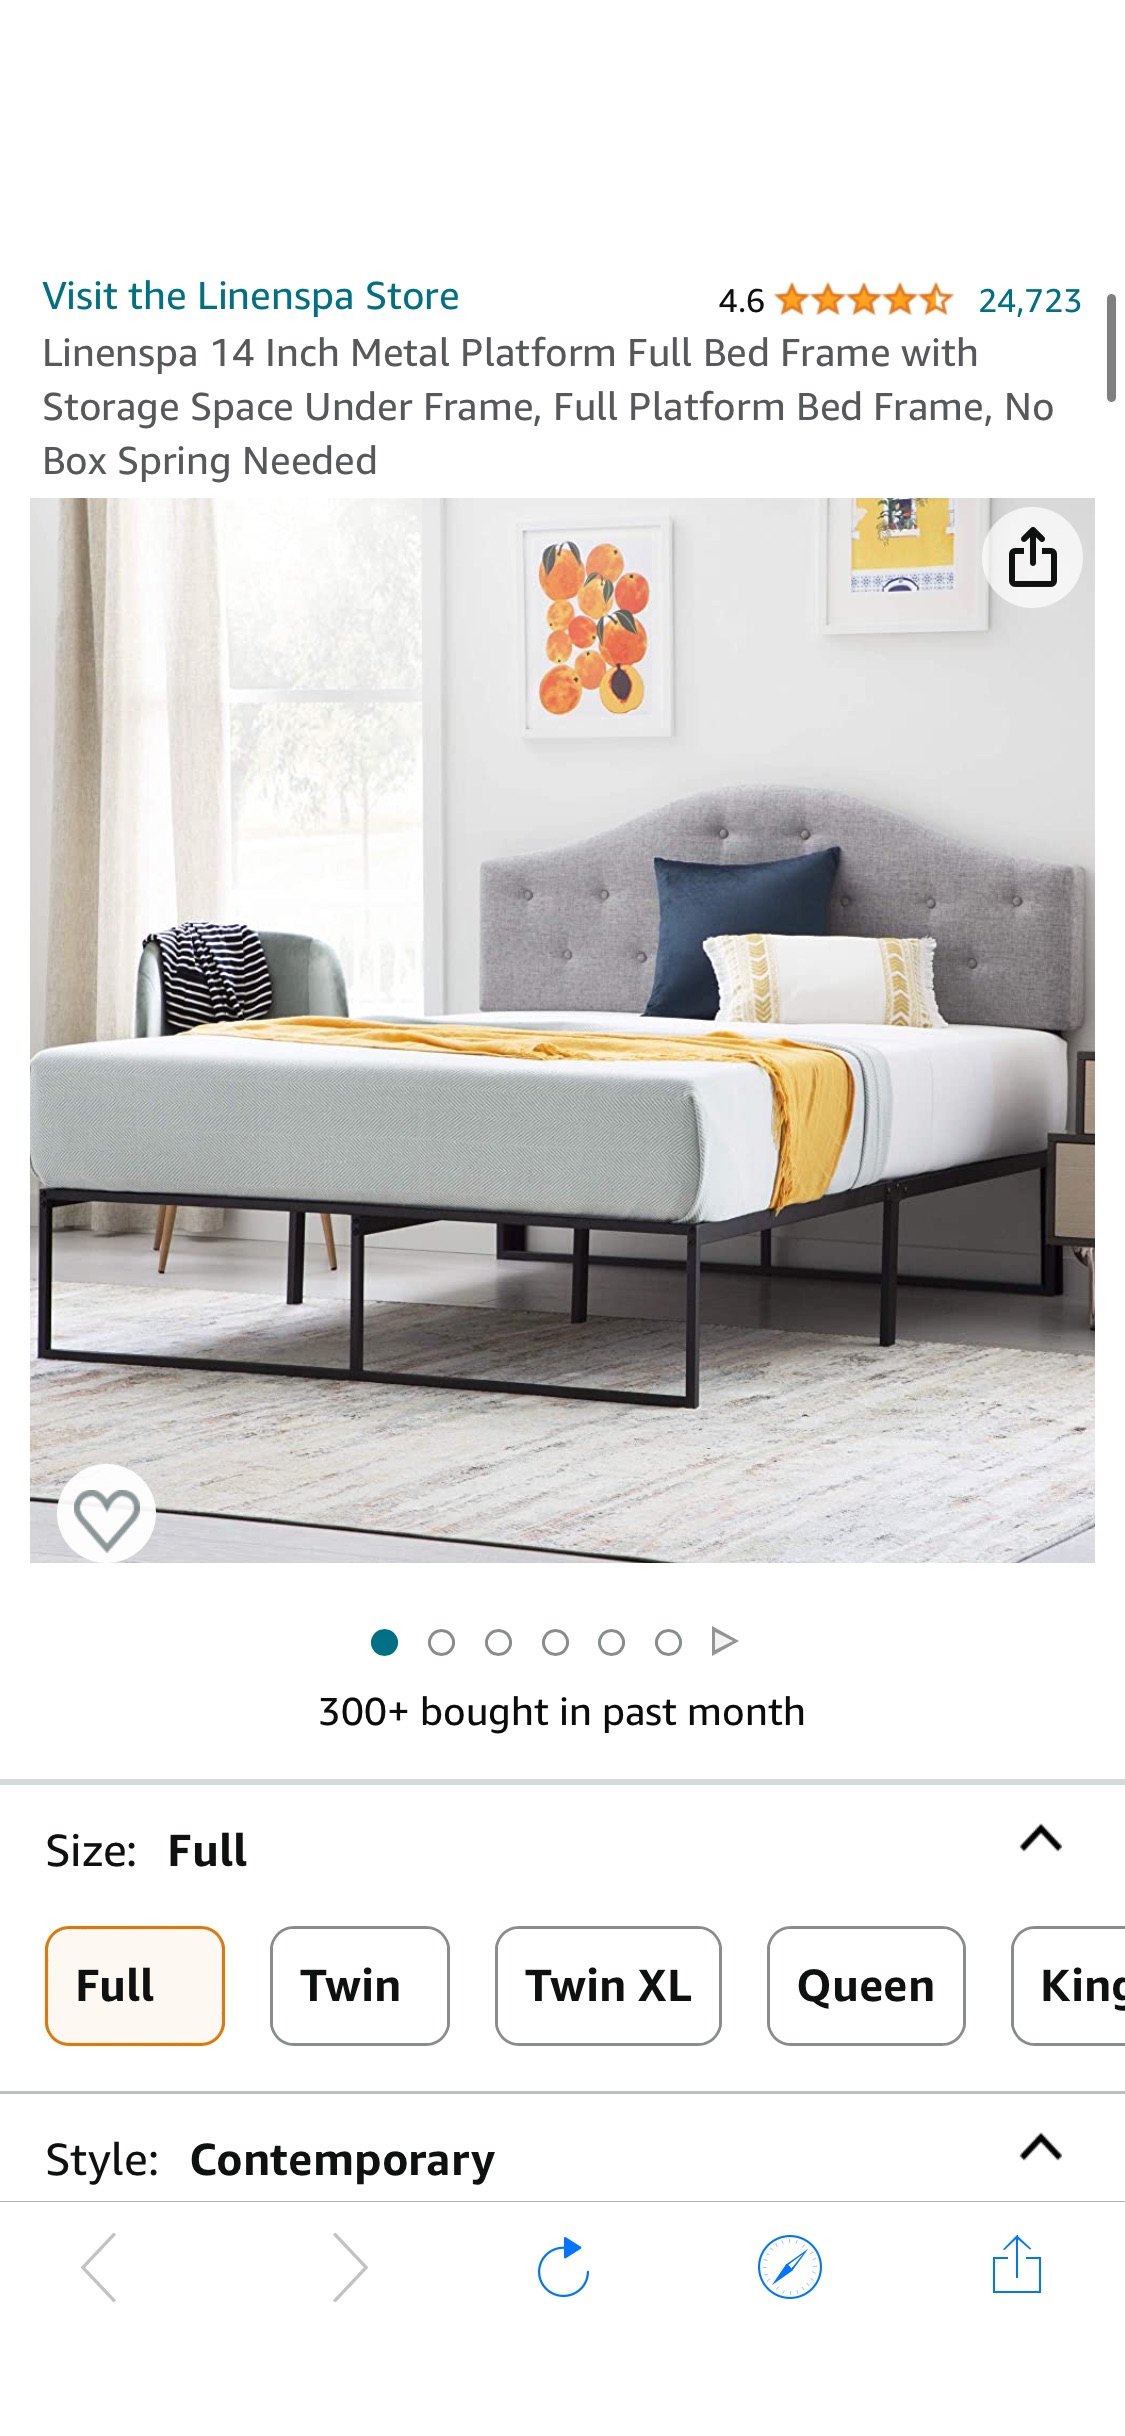 Amazon.com: Linenspa 14 Inch Metal Platform Full Bed Frame with Storage Space Under Frame, Full Platform Bed Frame, No Box Spring Needed : Home & Kitchen